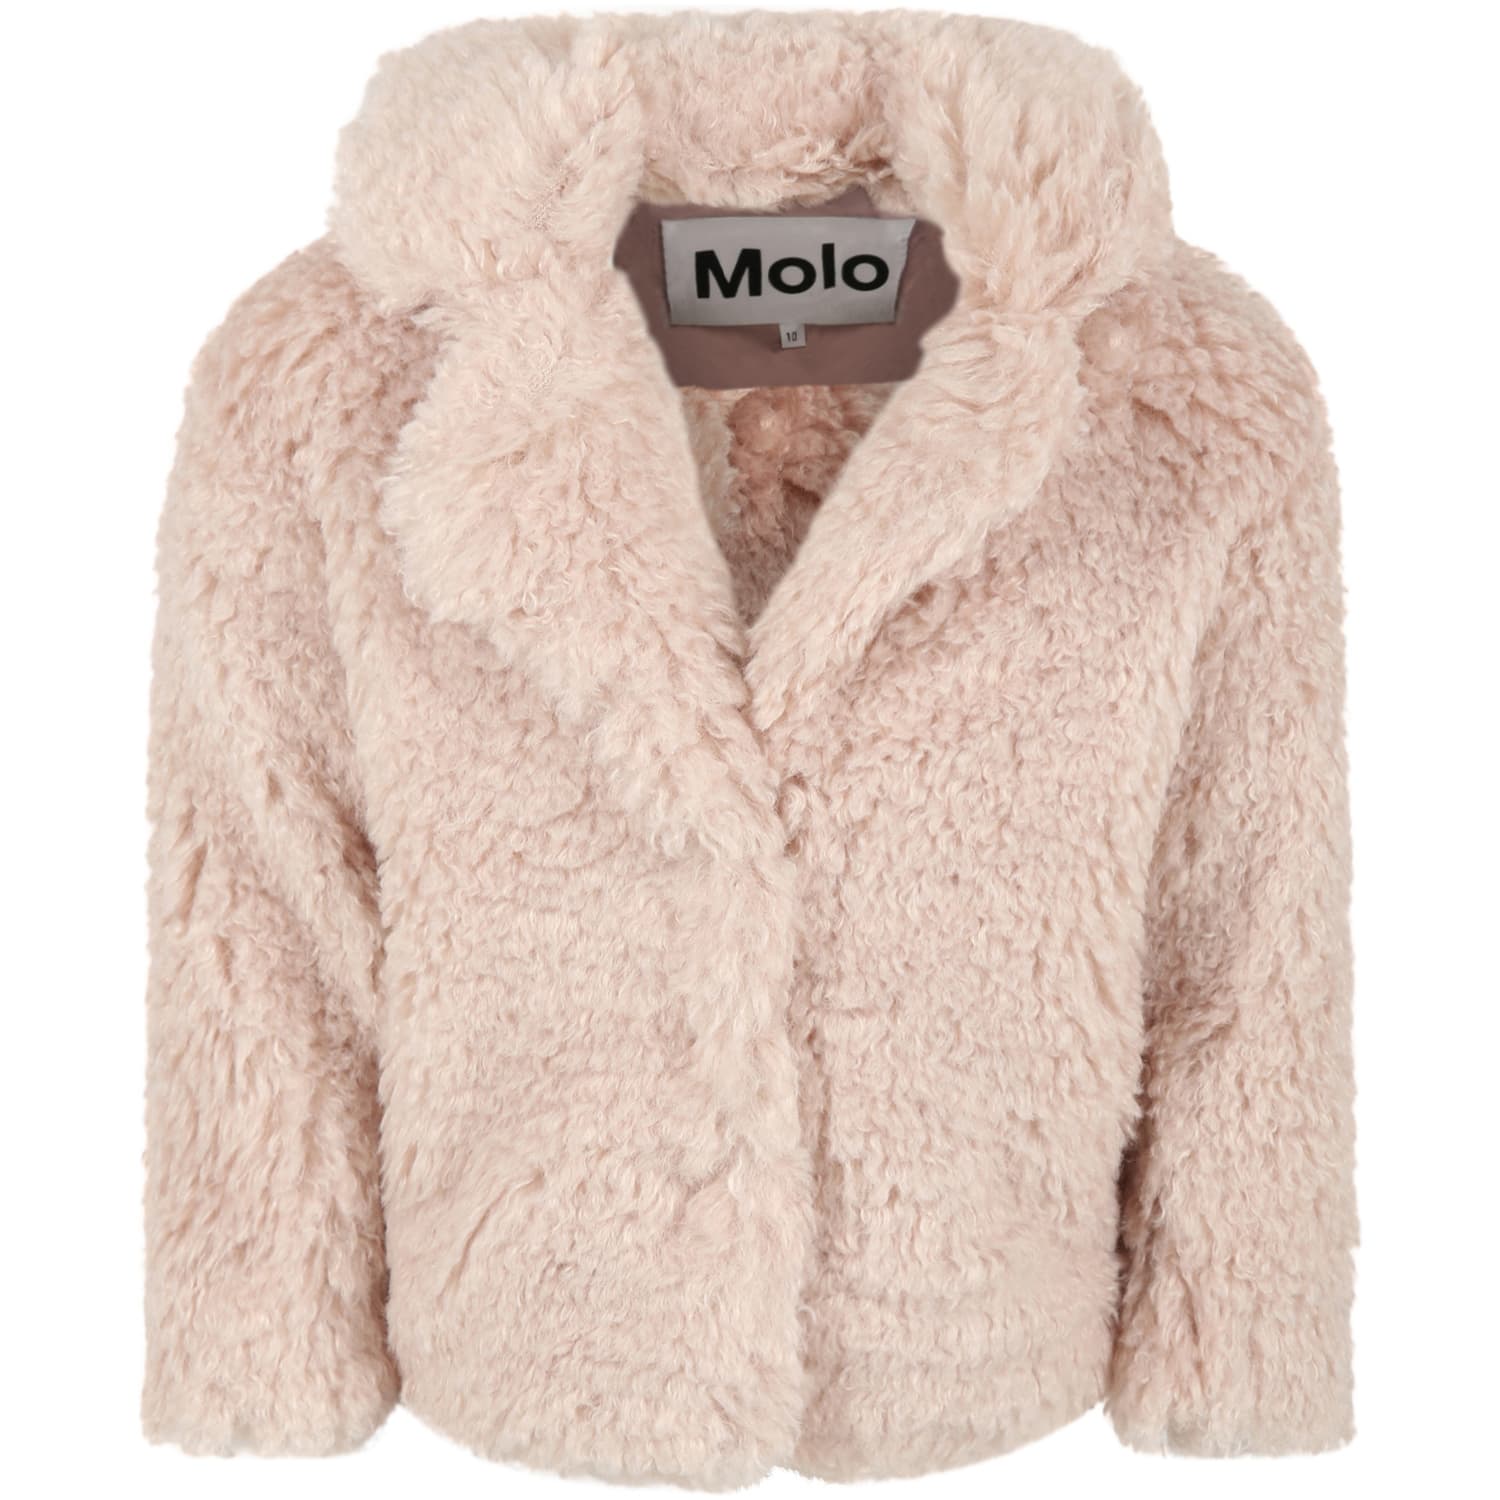 Molo Beige Coat For Girl